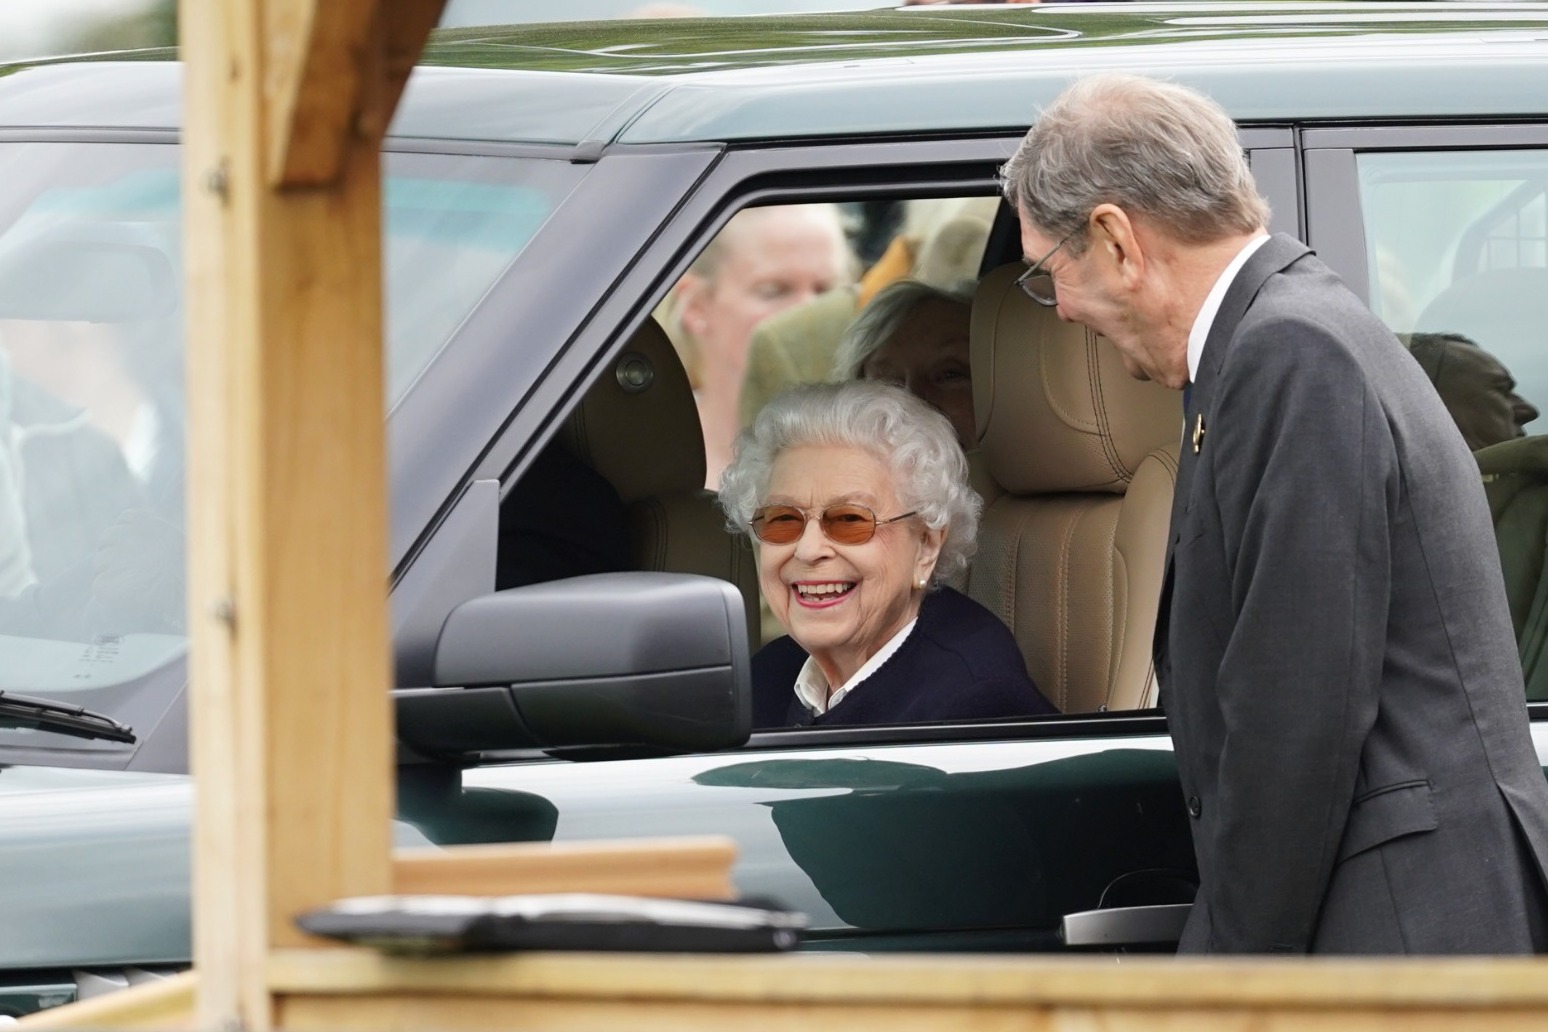 Smiling Queen arrives at Royal Windsor Horse Show 